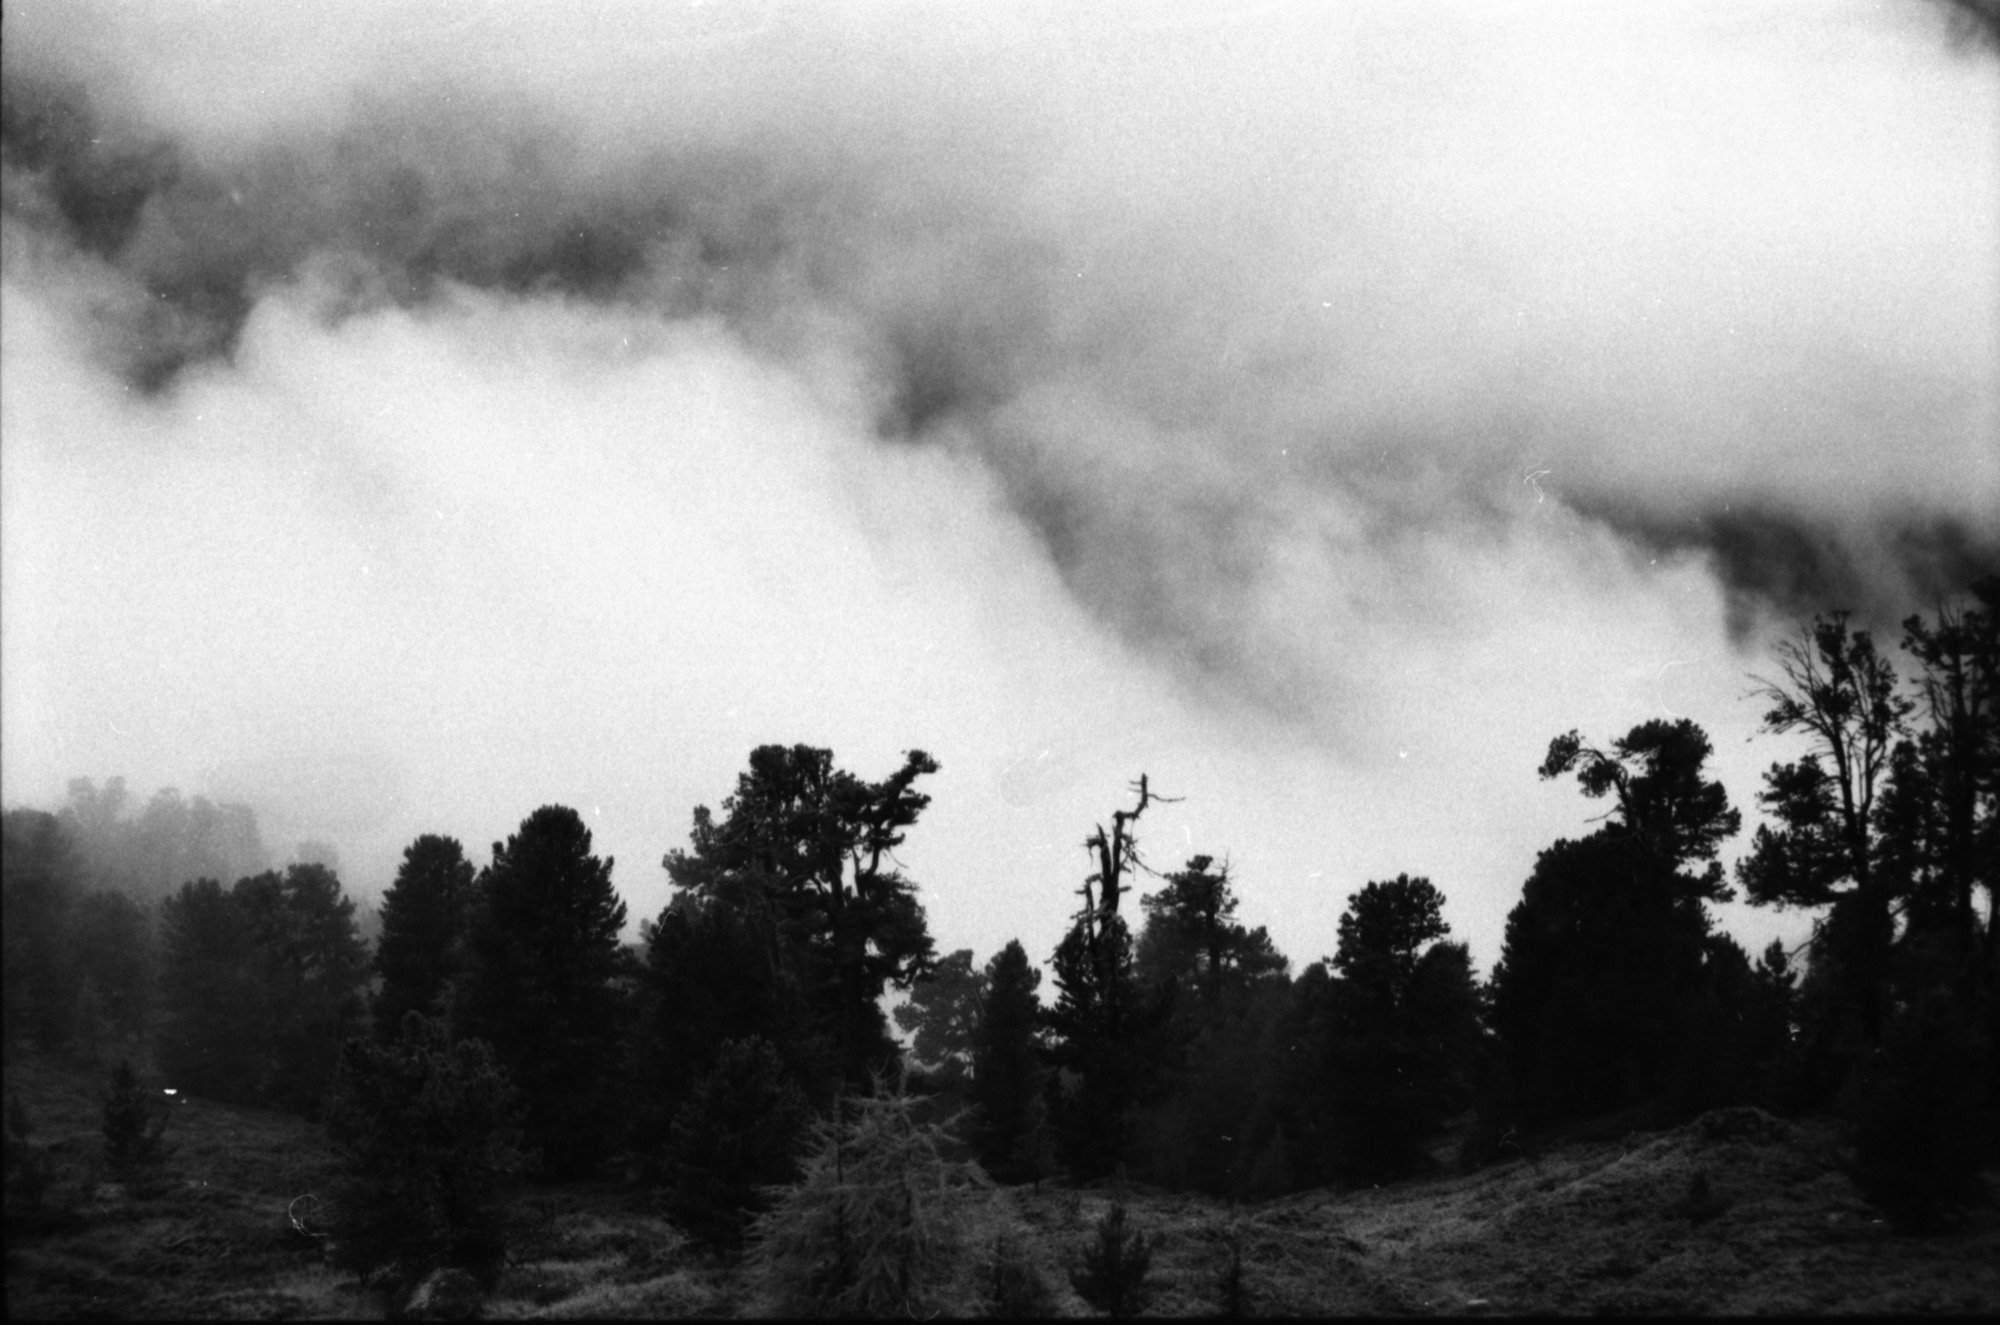  tyrol-black-and-white-photography-35mm-matthias-grunsky 